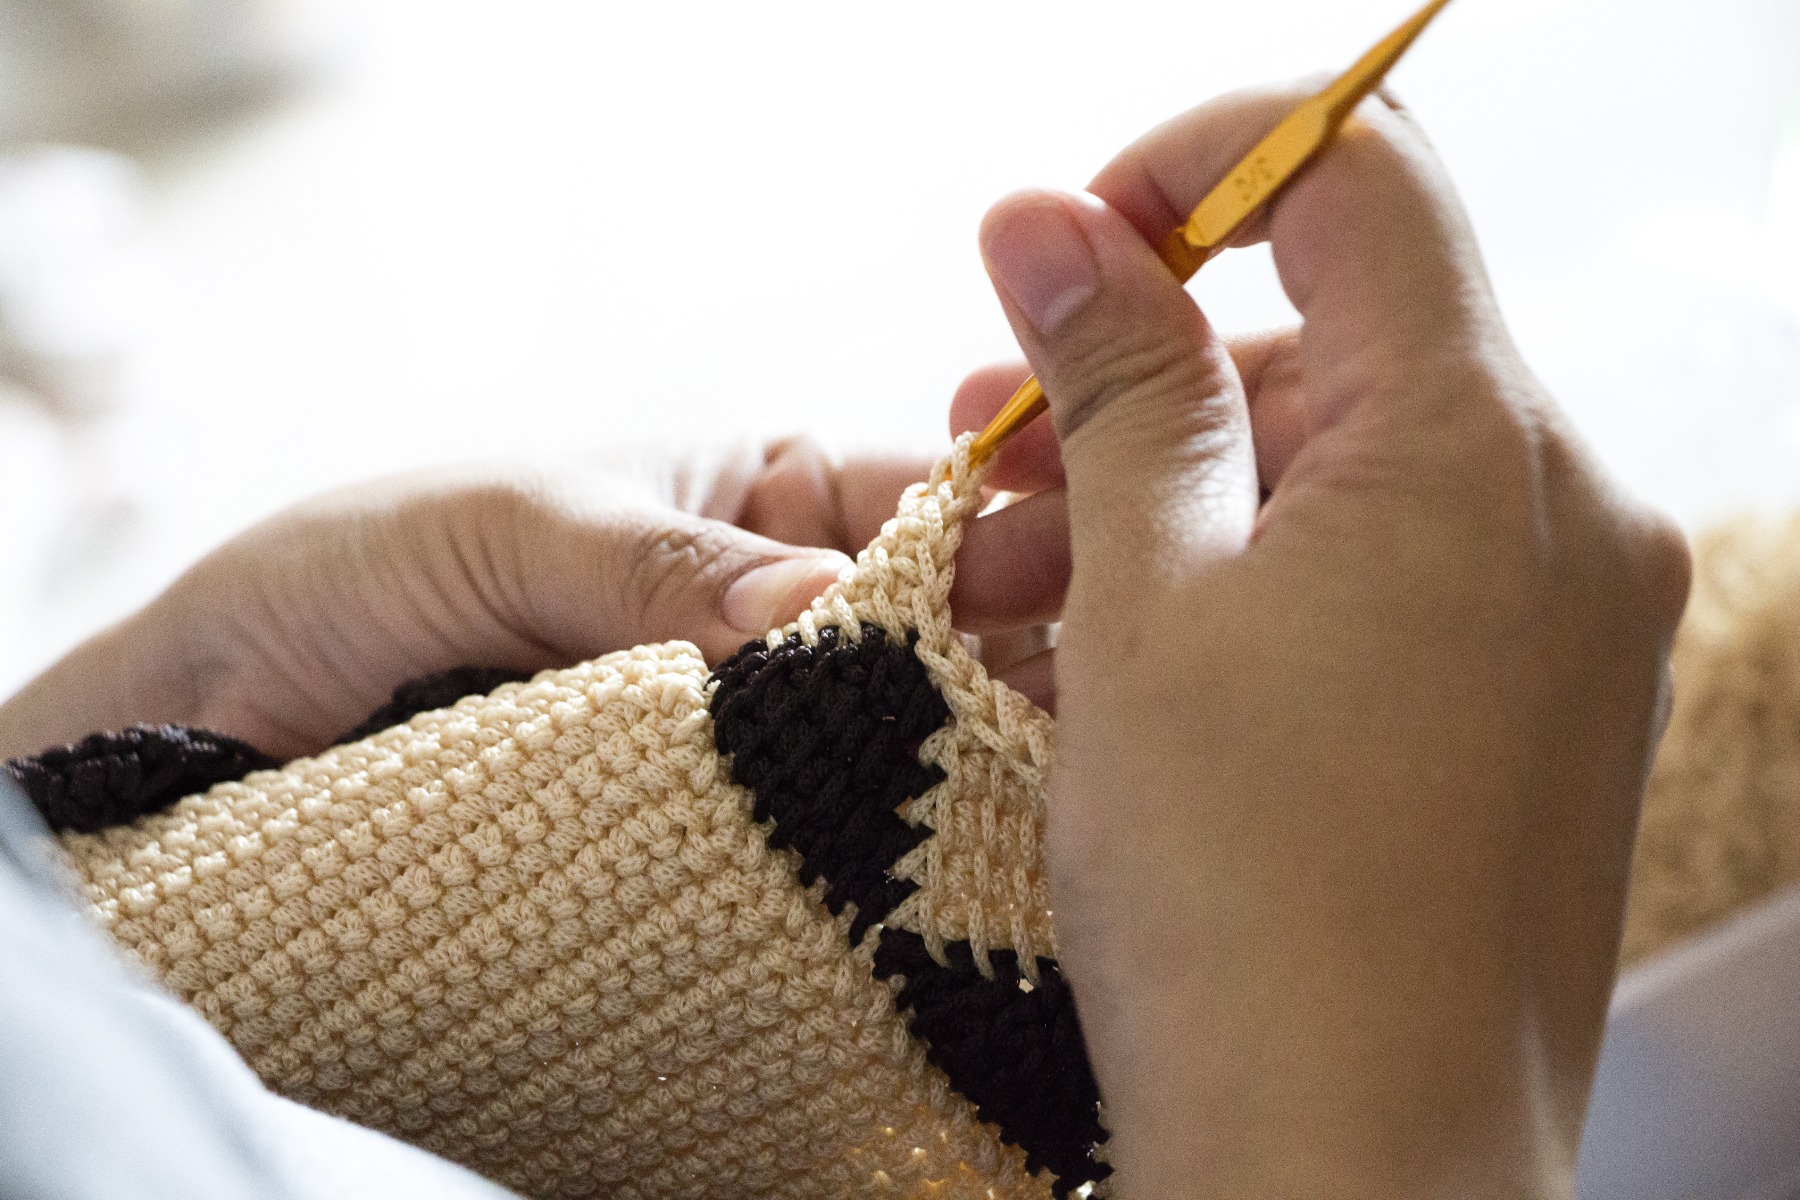 A person crocheting.